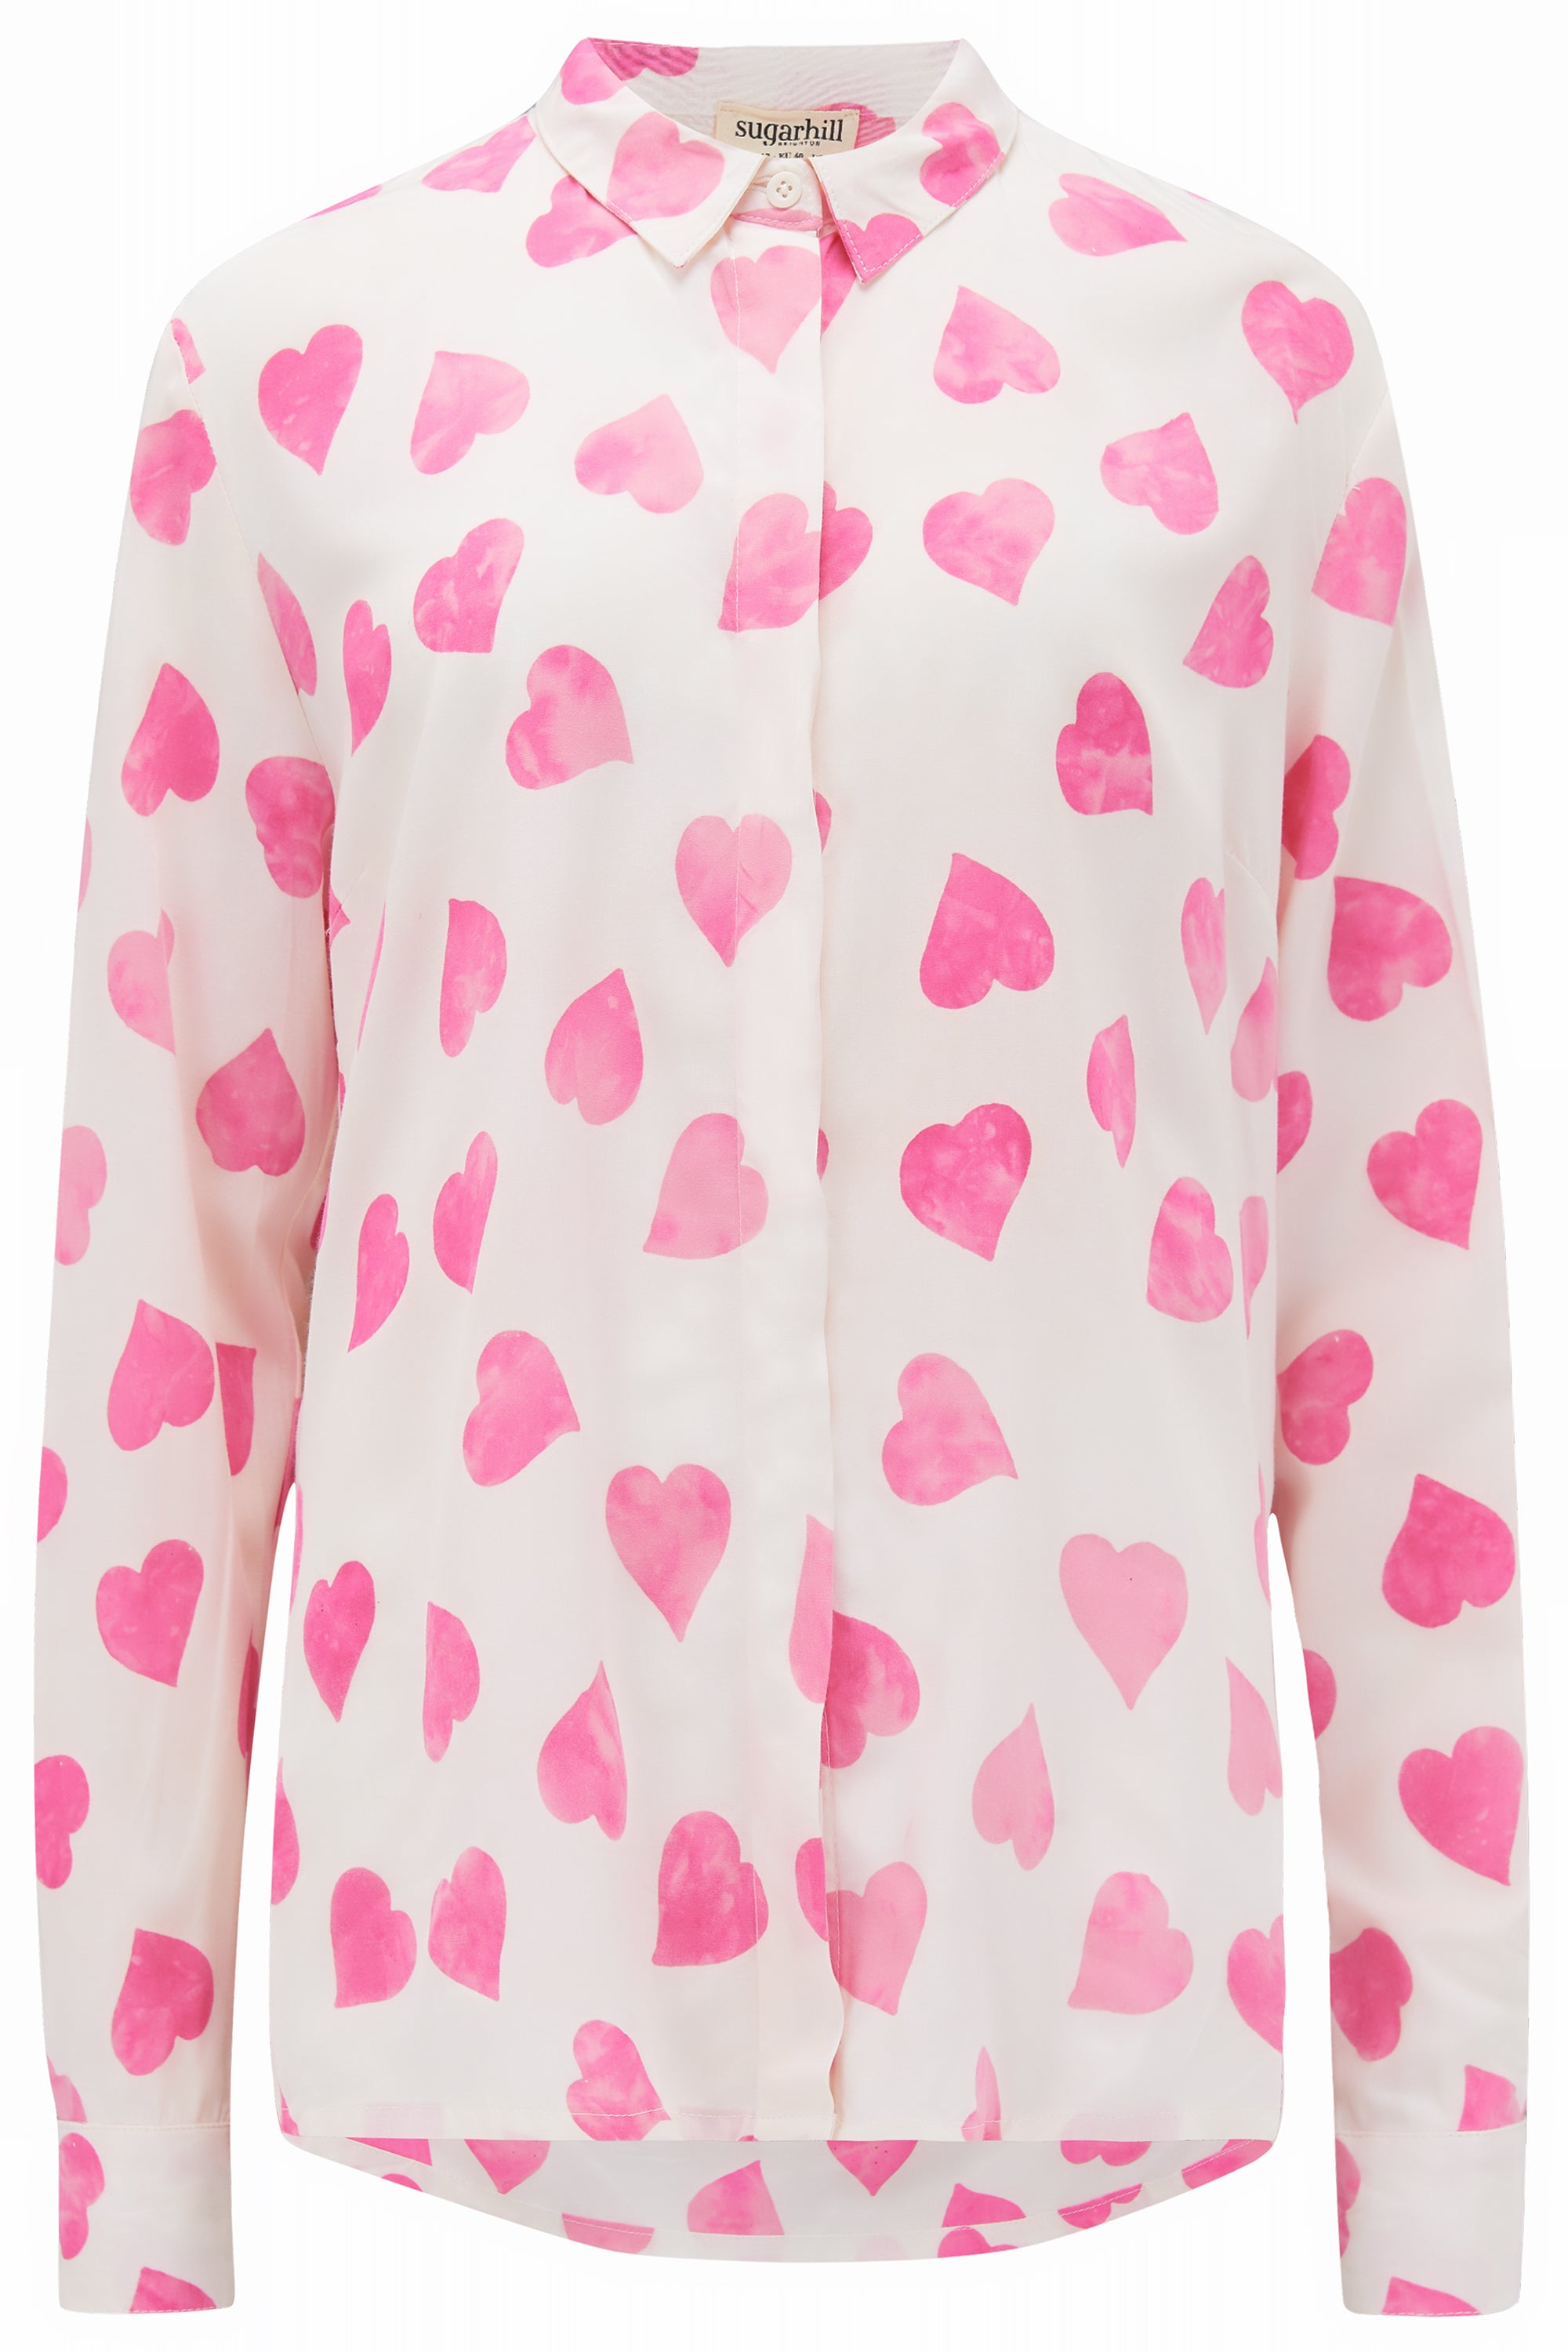 Joy Batik Shirt | Big Hearts (Off White/Pink)